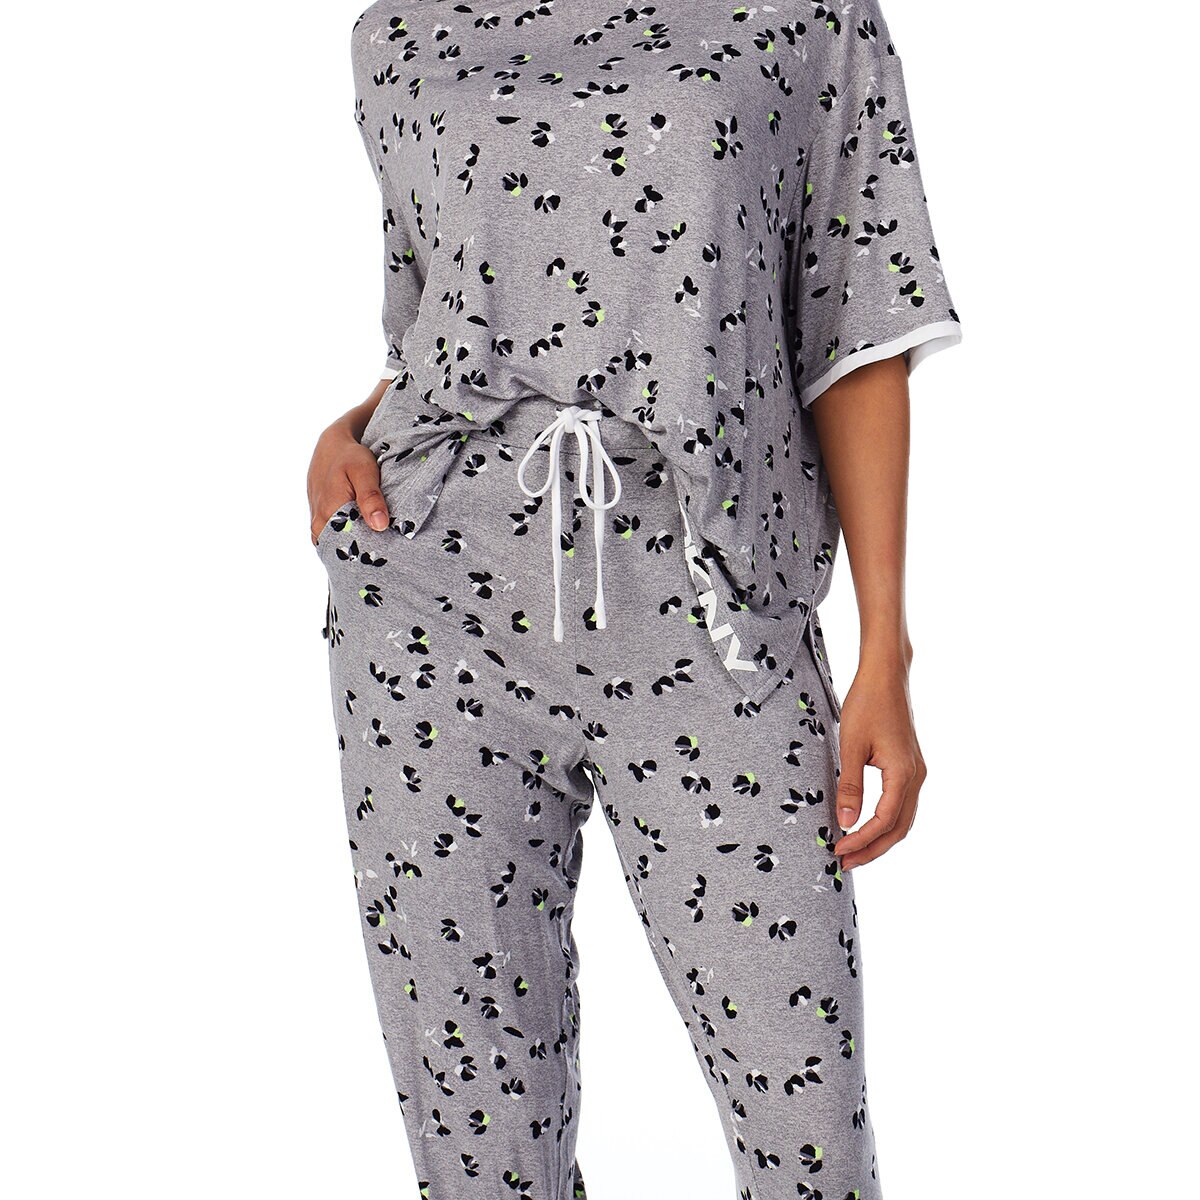 DKNY Pijama para Dama Gris